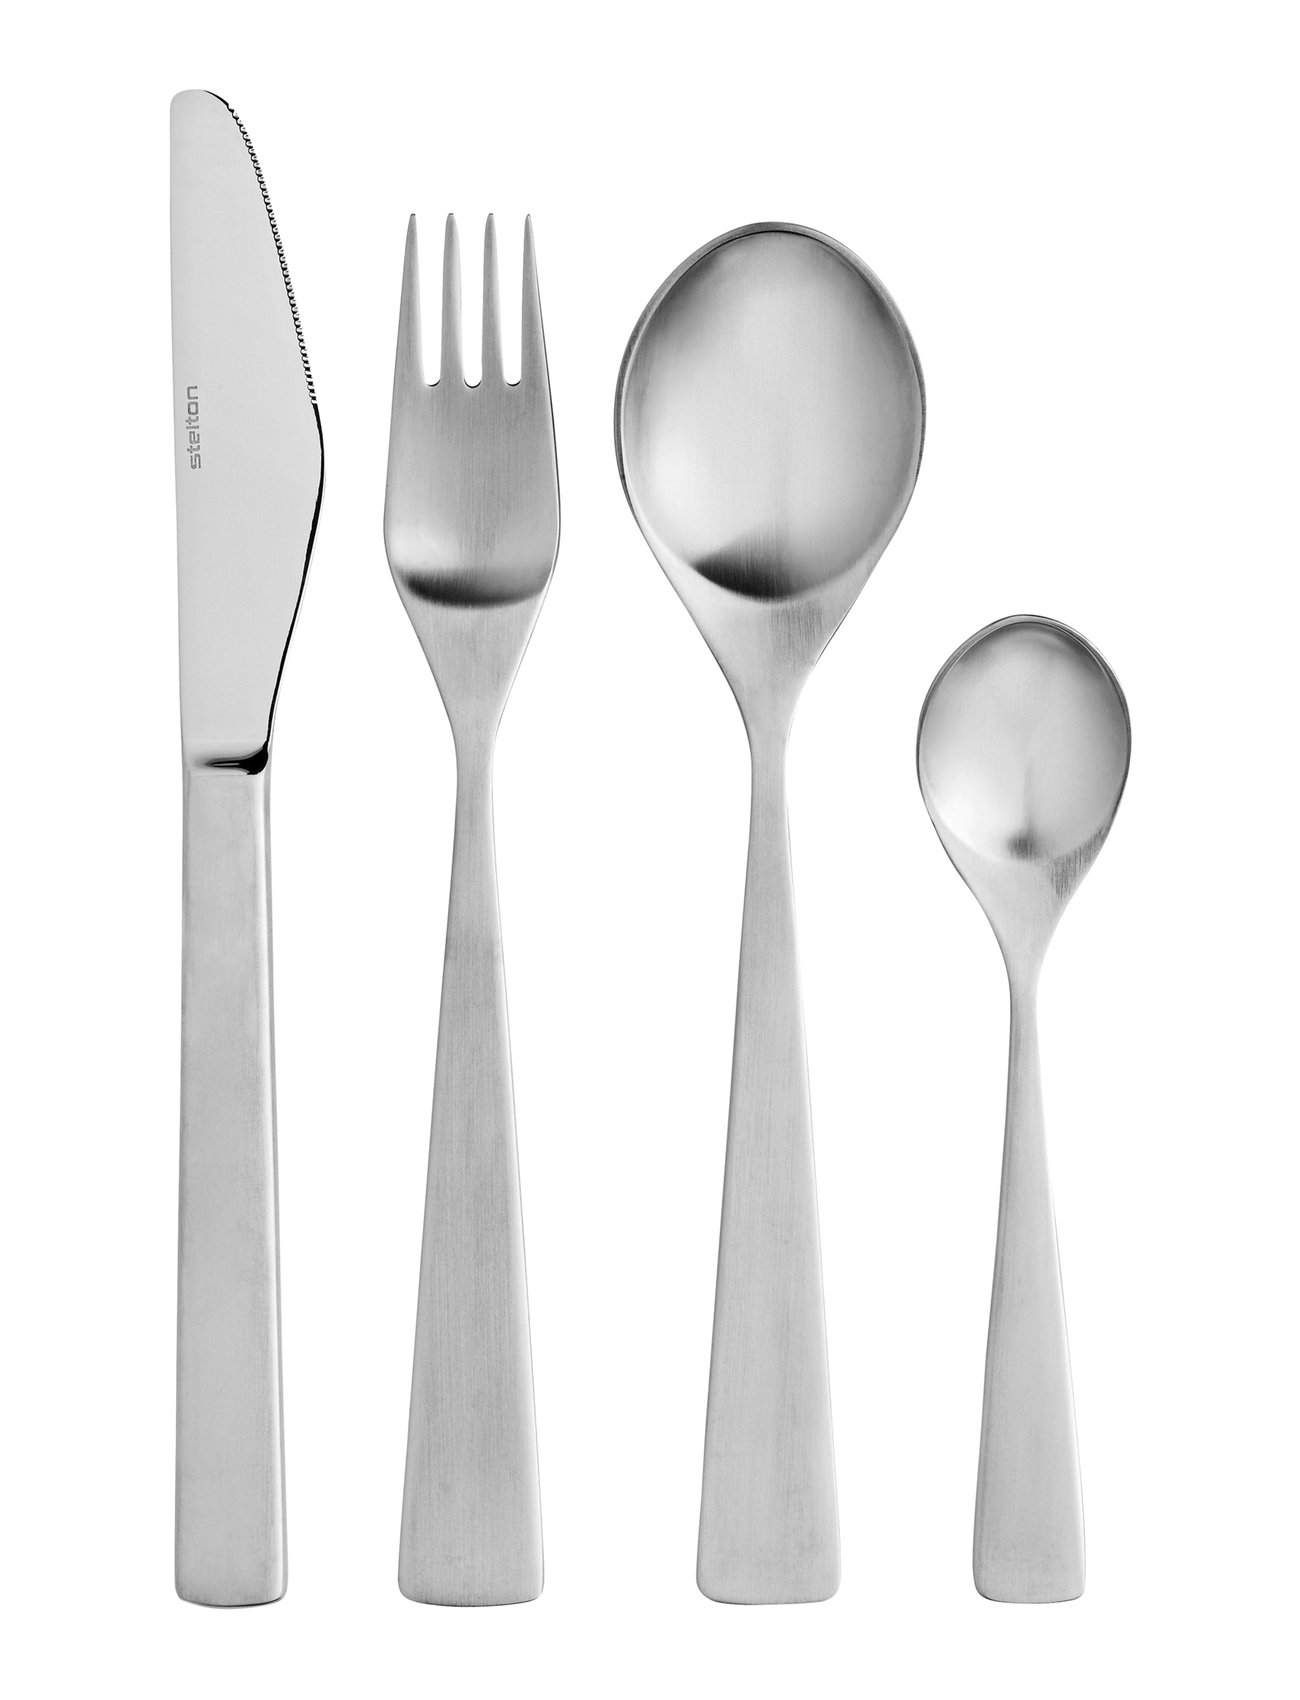 Maya 2000 Bestiksæt Steel Home Tableware Cutlery Cutlery Set Silver Stelton